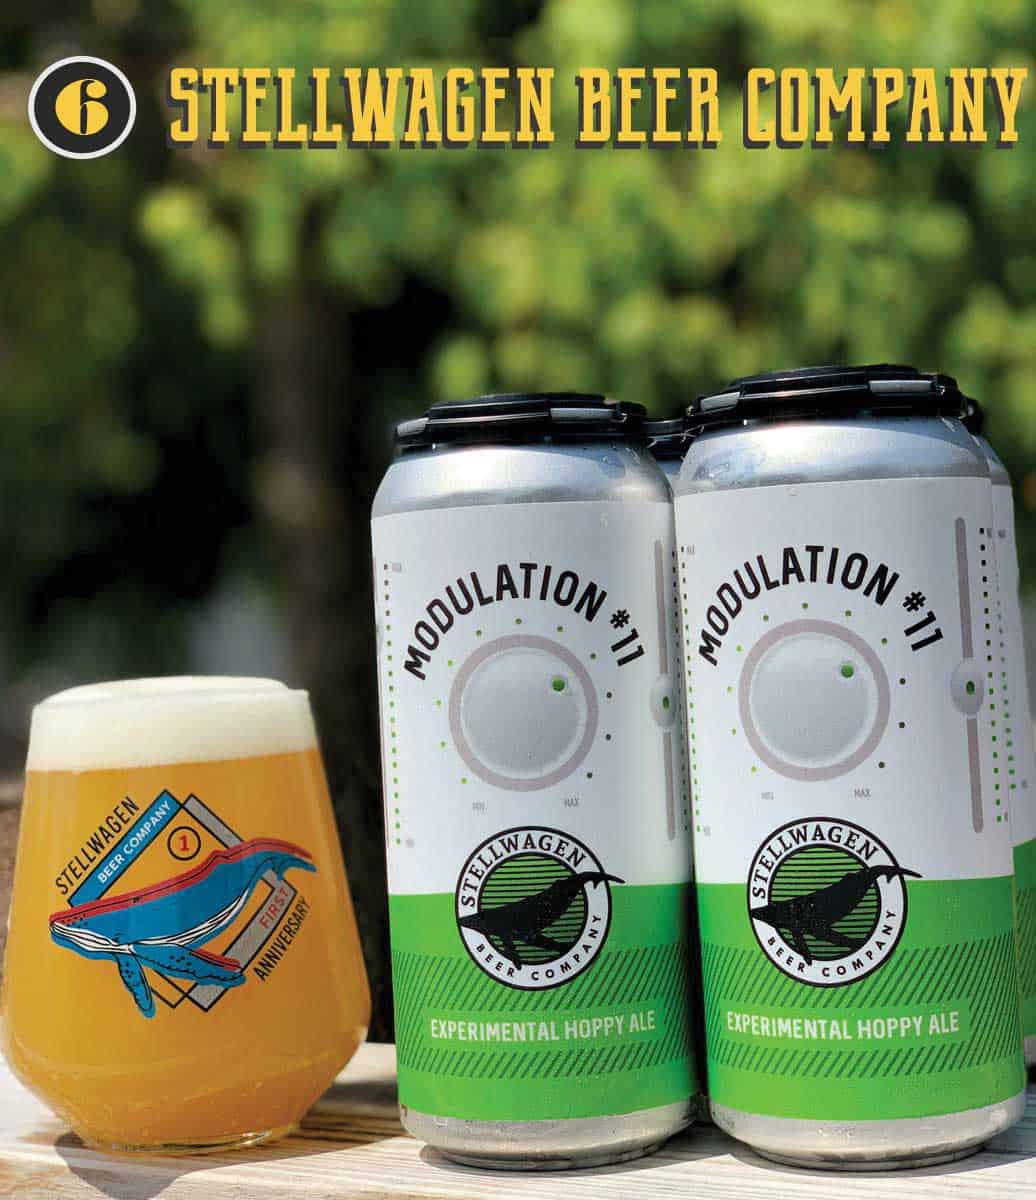 Stellwagen-Beer-Company-b